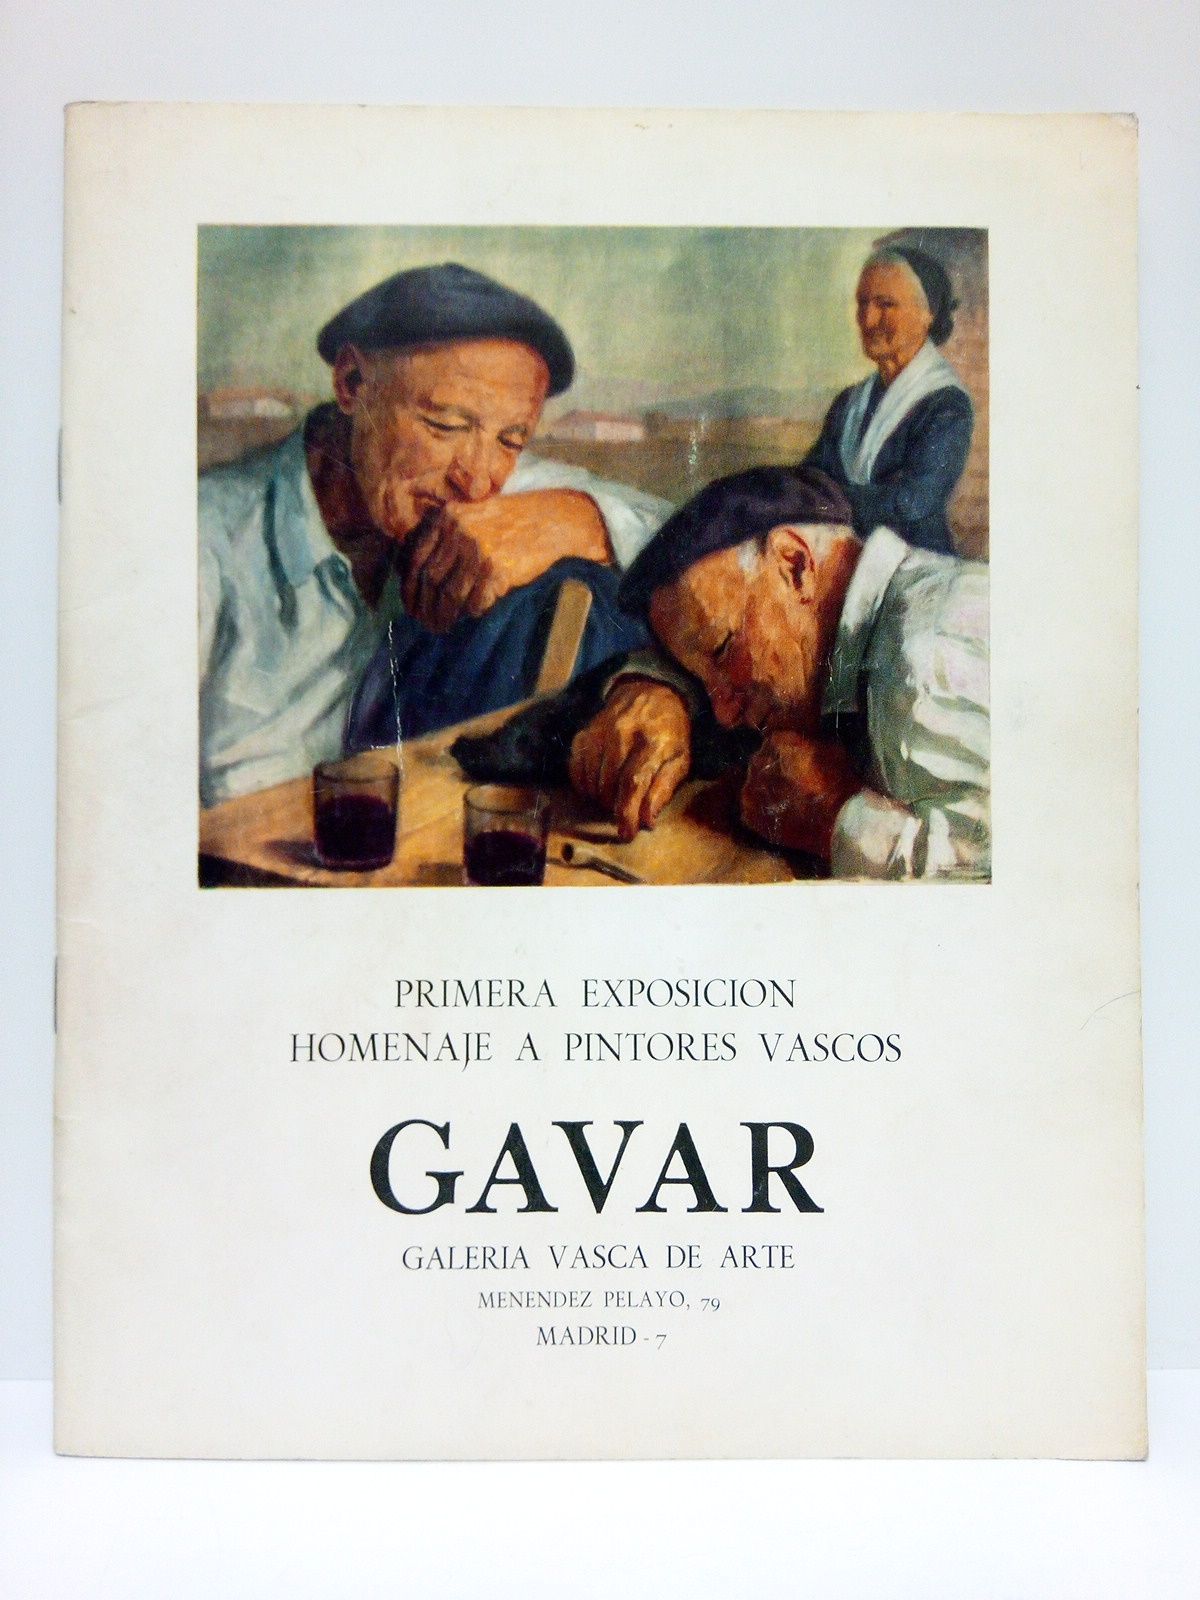 GAVAR, GALERIA VASCA DE ARTE - Primera Exposicin Homenaje a pintores vascos  /  Introduccin de Bernardino de Pantorba